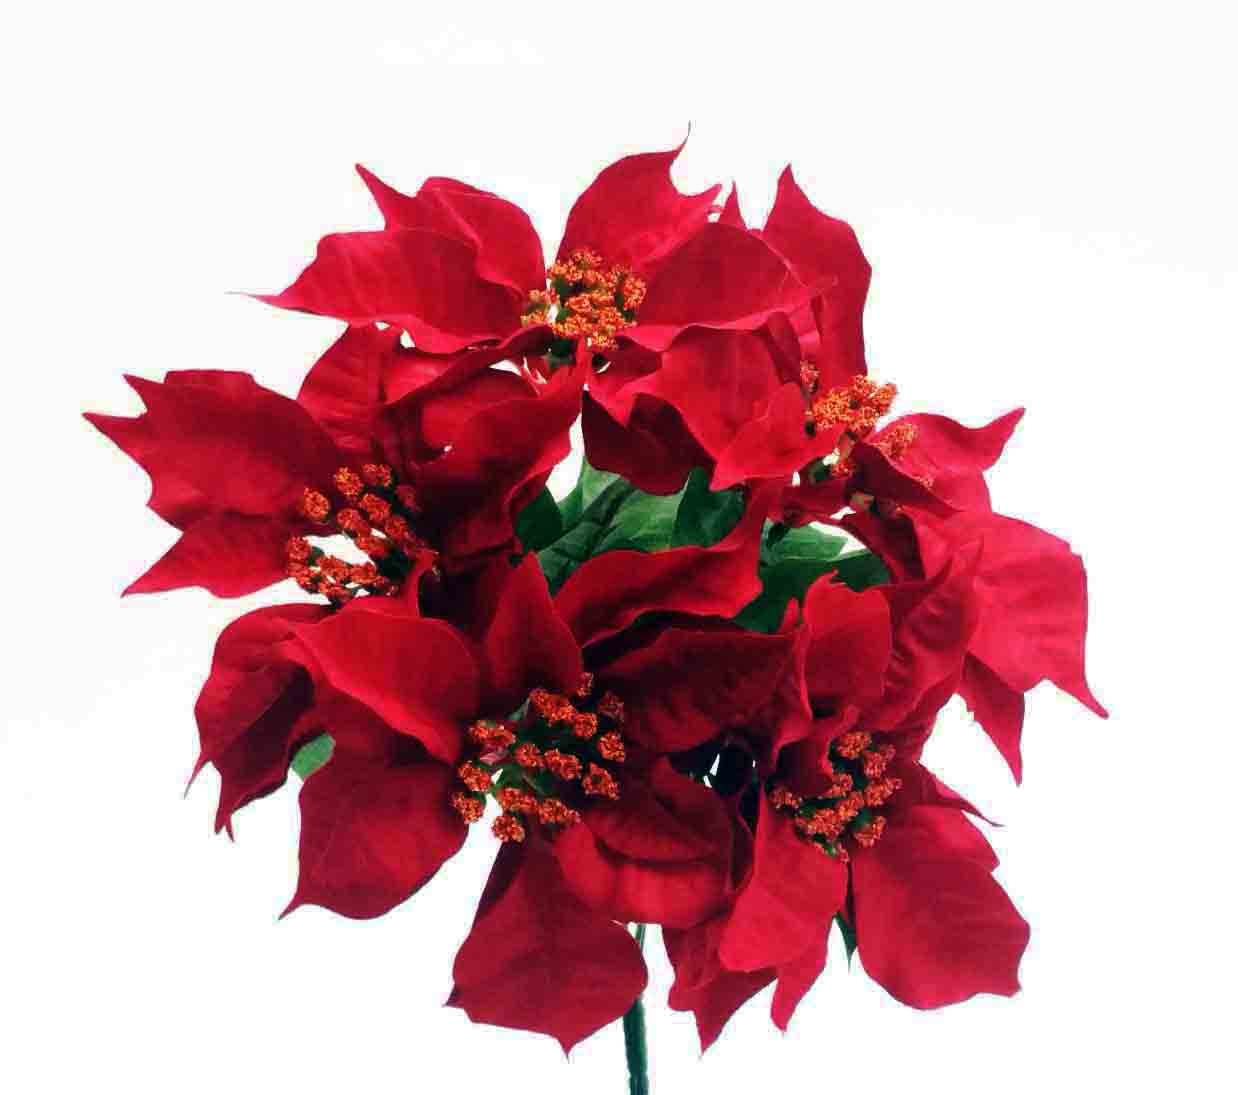 X328 - 13" Red Poinsettia Bush x 5 - 14.95 ea